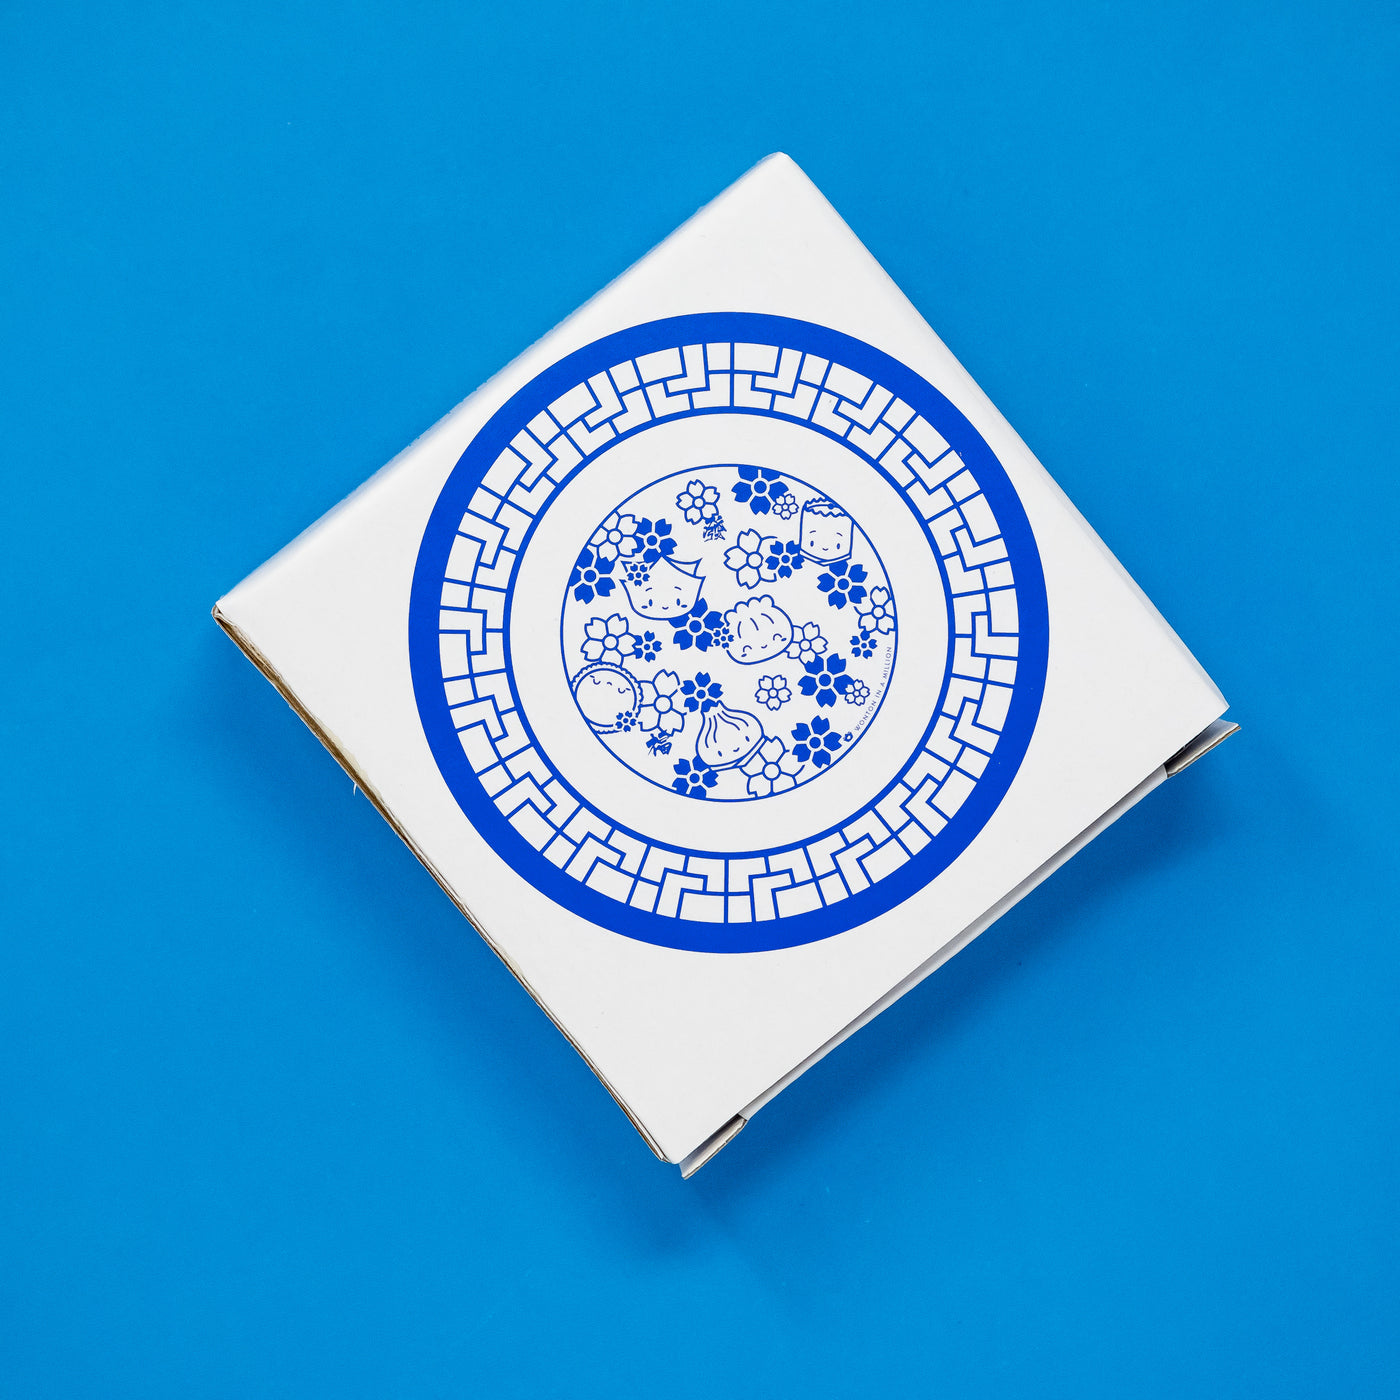 MISC030 | Porcelain Ceramic 4" Sauce Plate